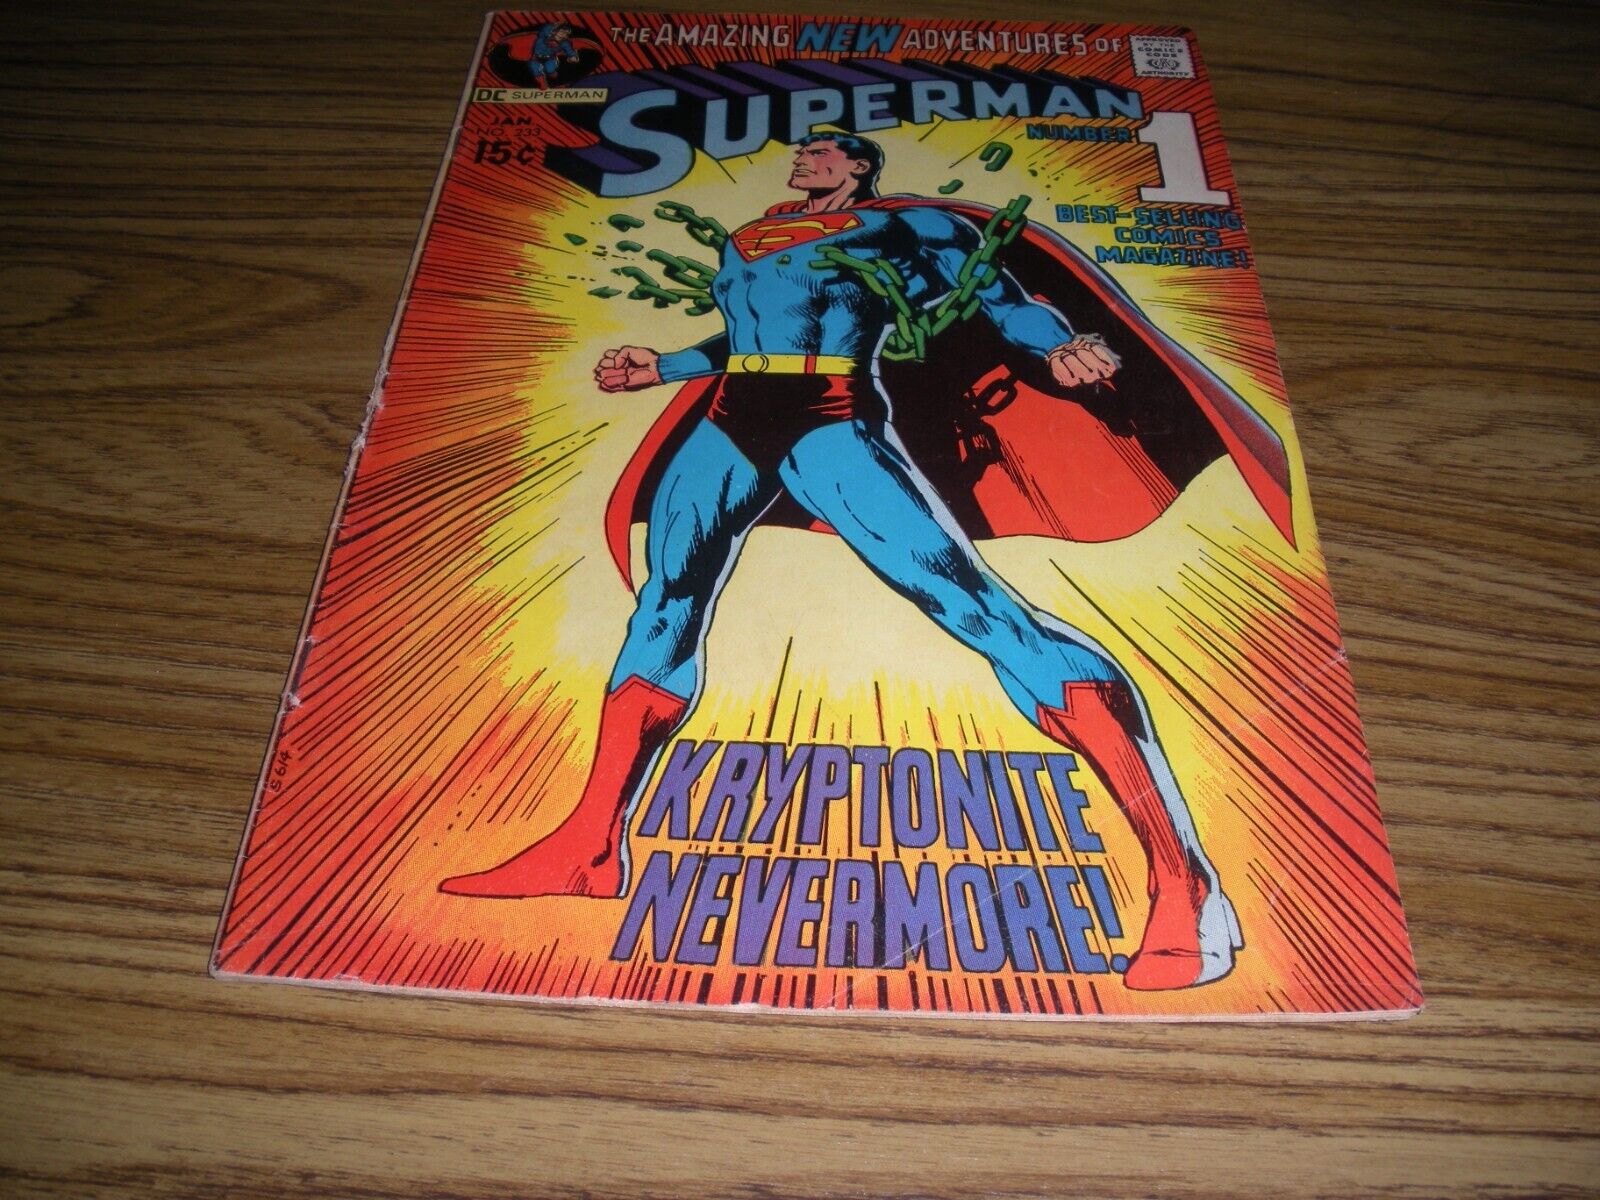 SUPERMAN BRONZE AGE THE AMAZING NEW ADVENTURES OF SUPERMAN #1 JAN.1971 #233 VG